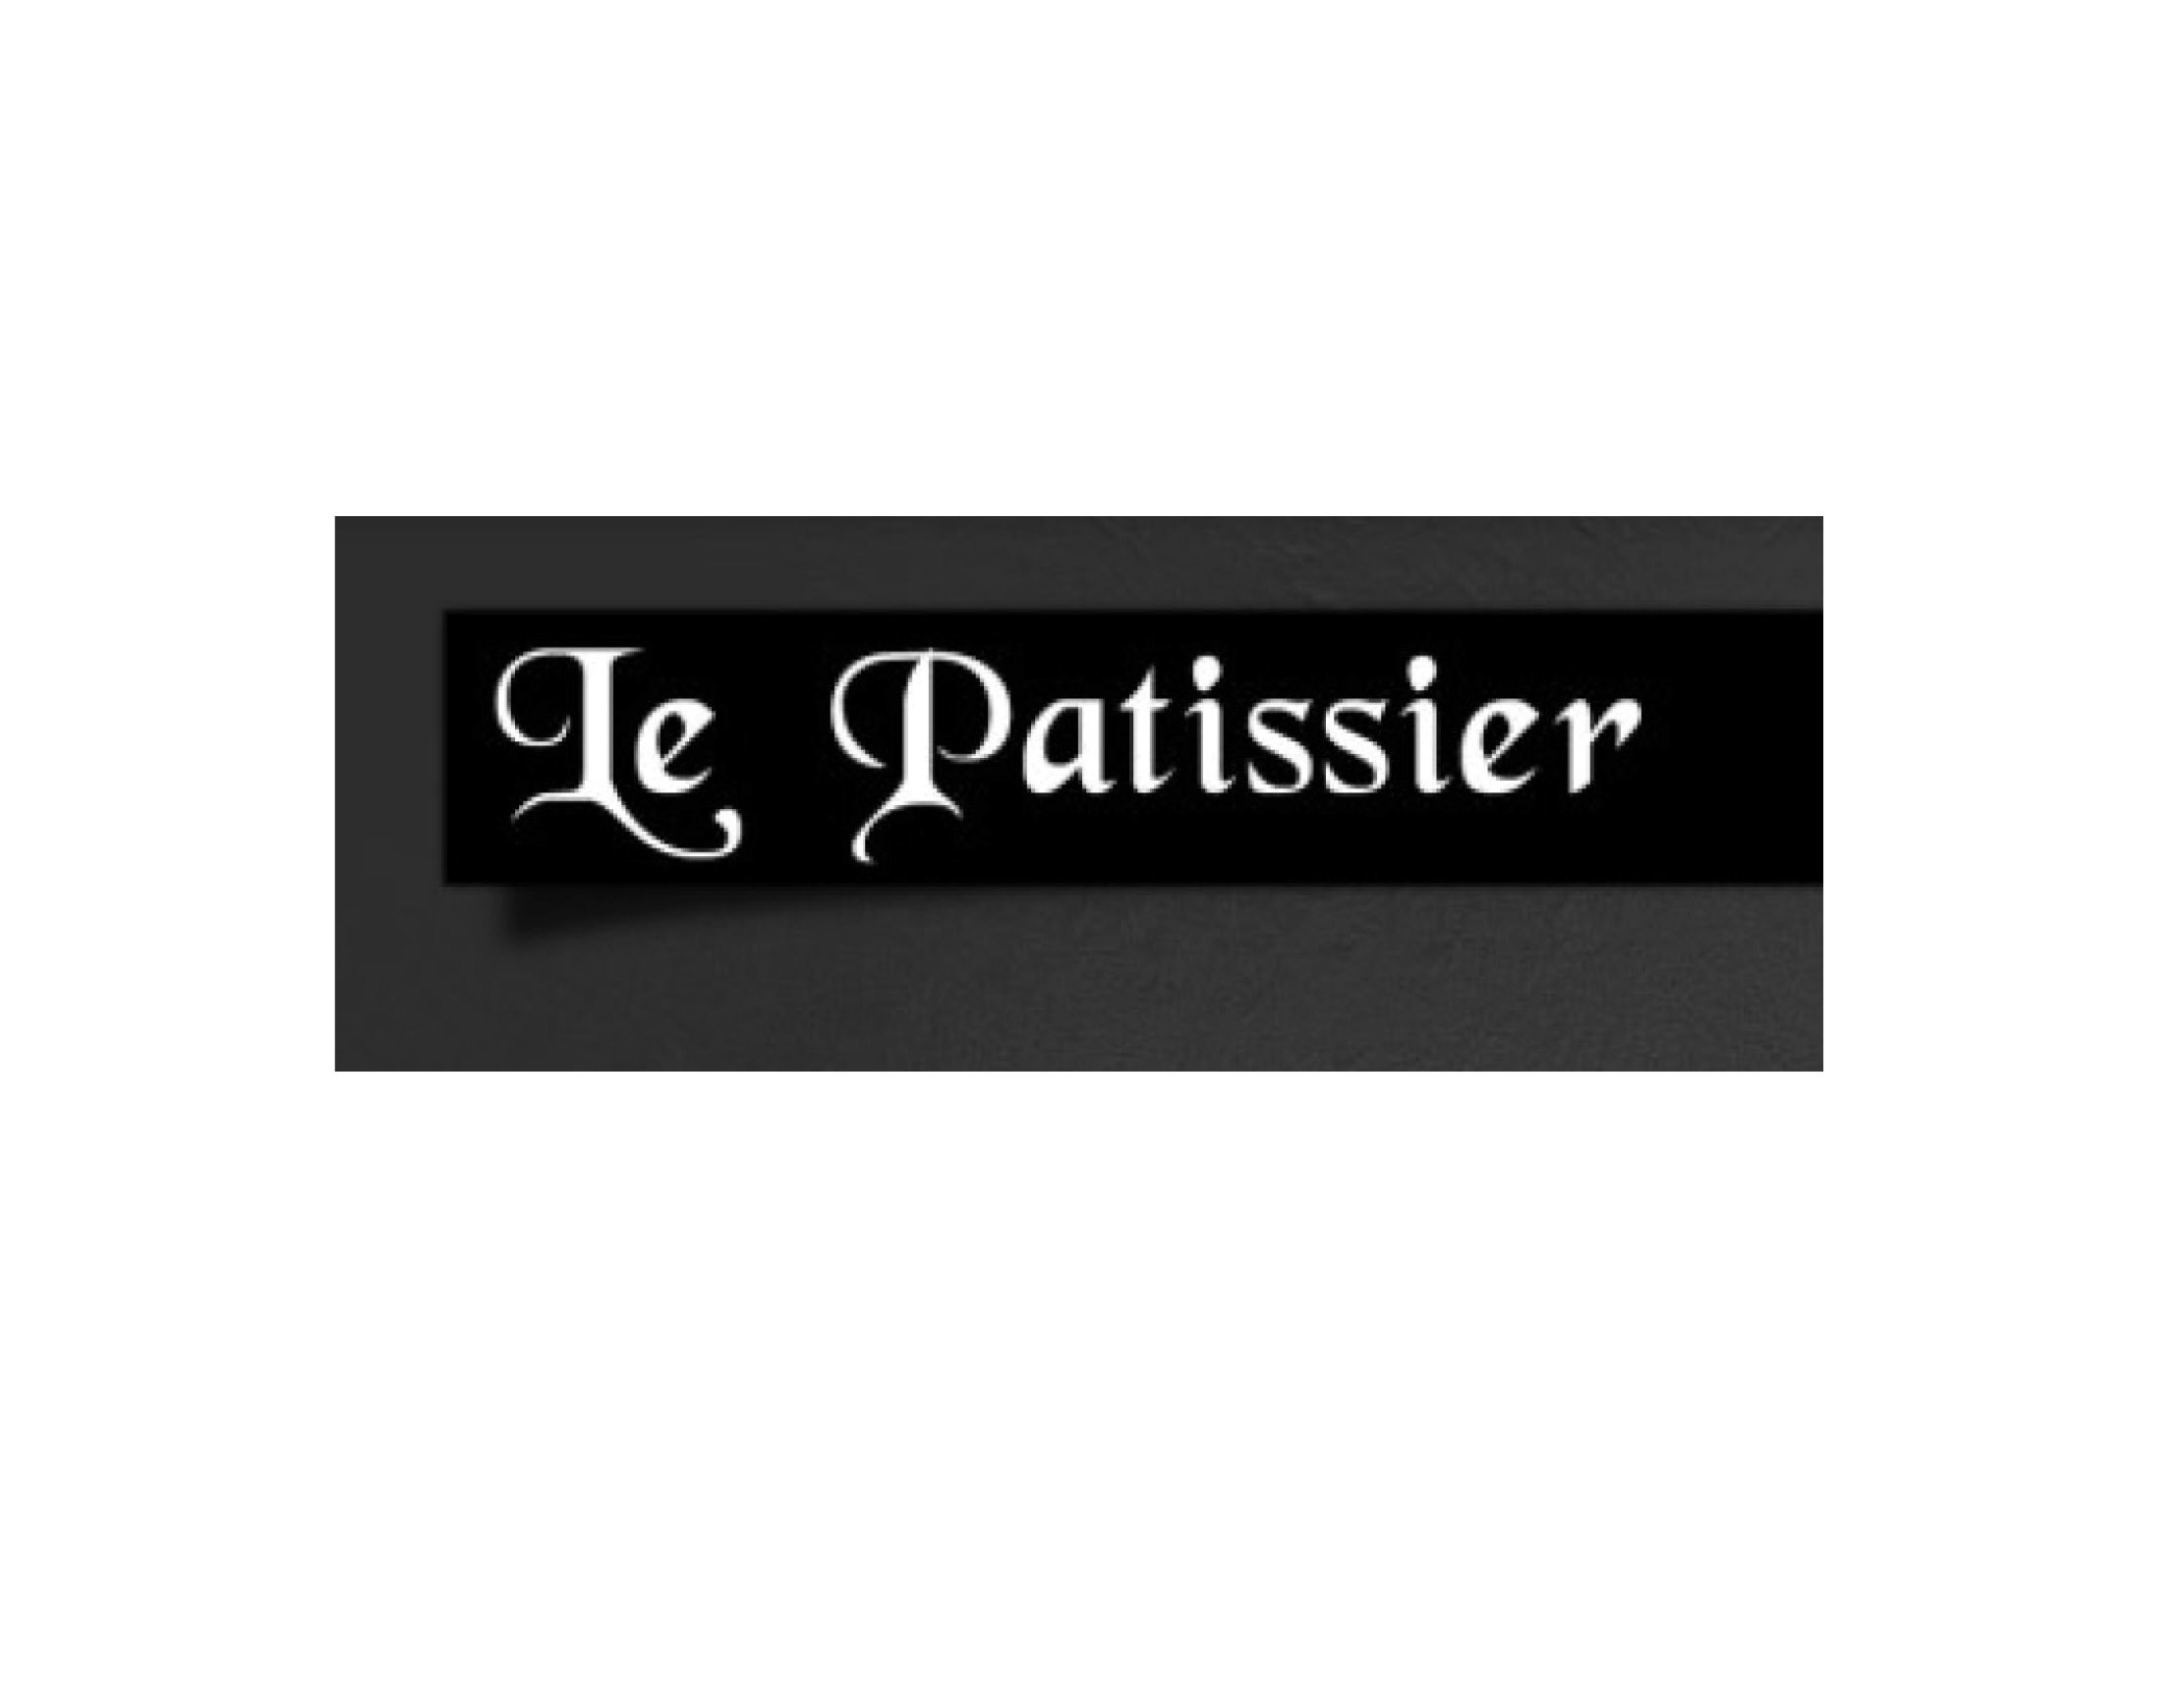 Le Patissier Website Design by Bare Bones Marketing